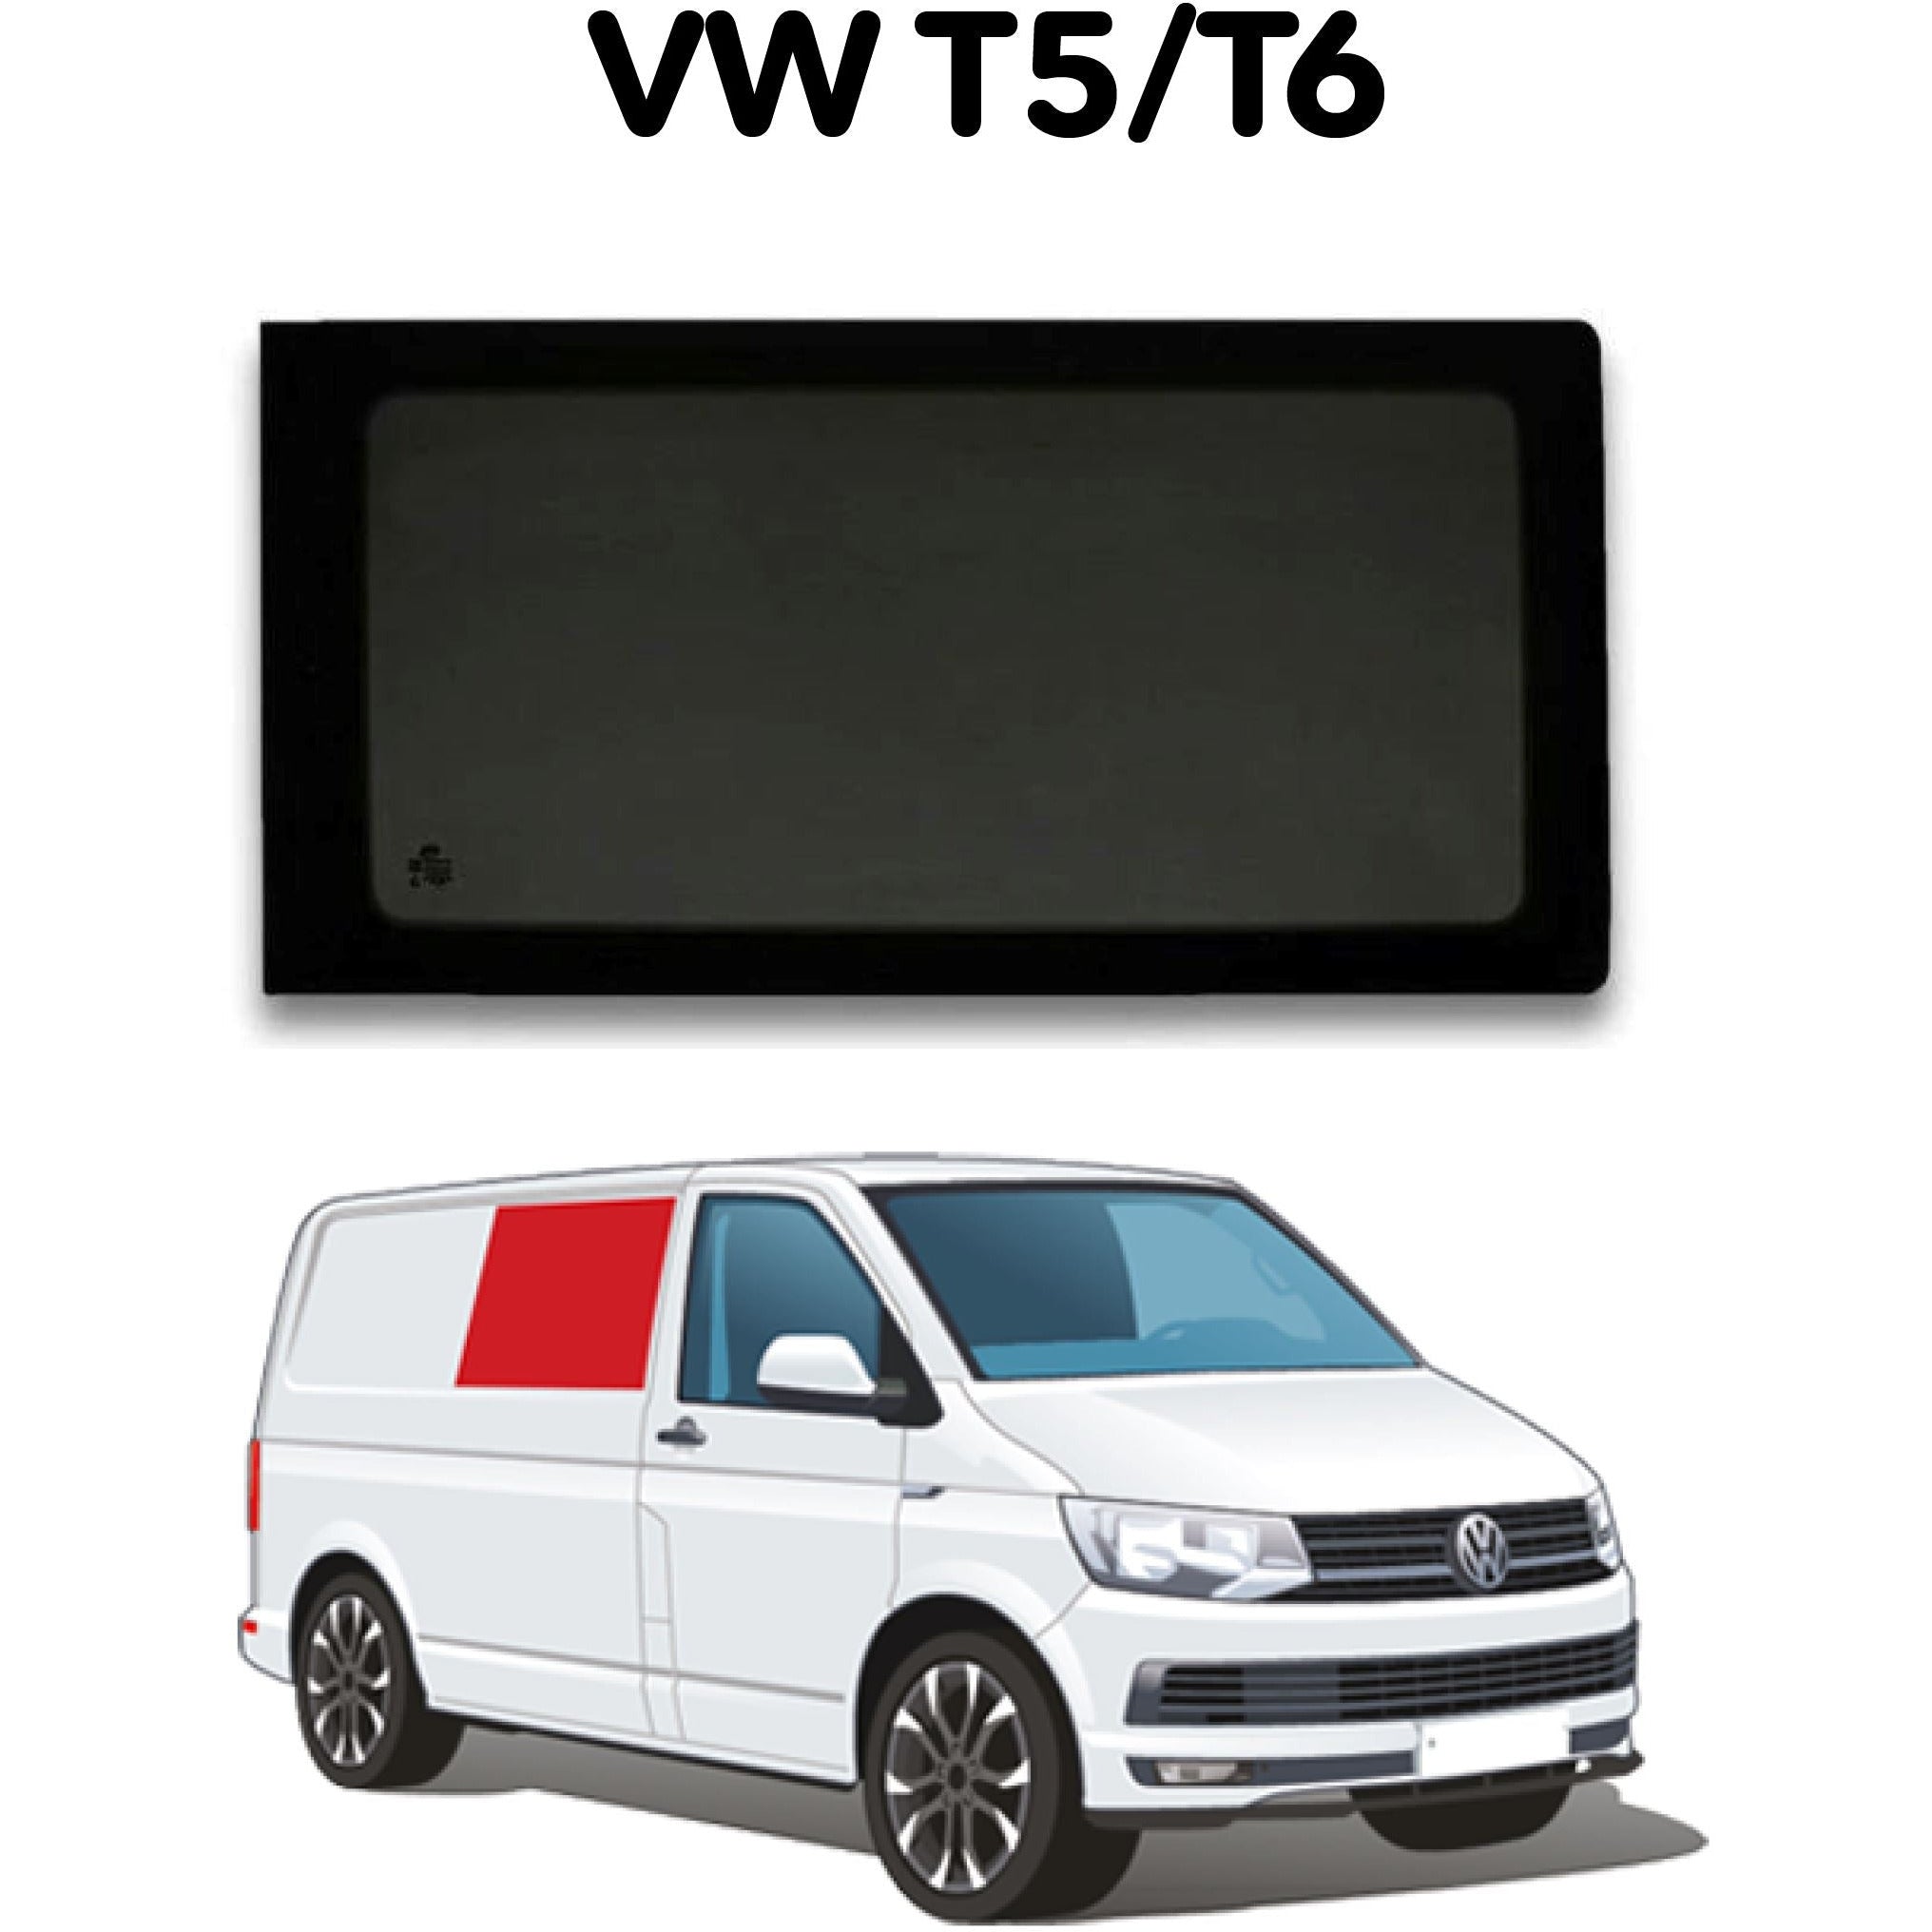 Right Fixed Window VW T5 / T6 - Non-sliding door Camper Glass by Kiravans 